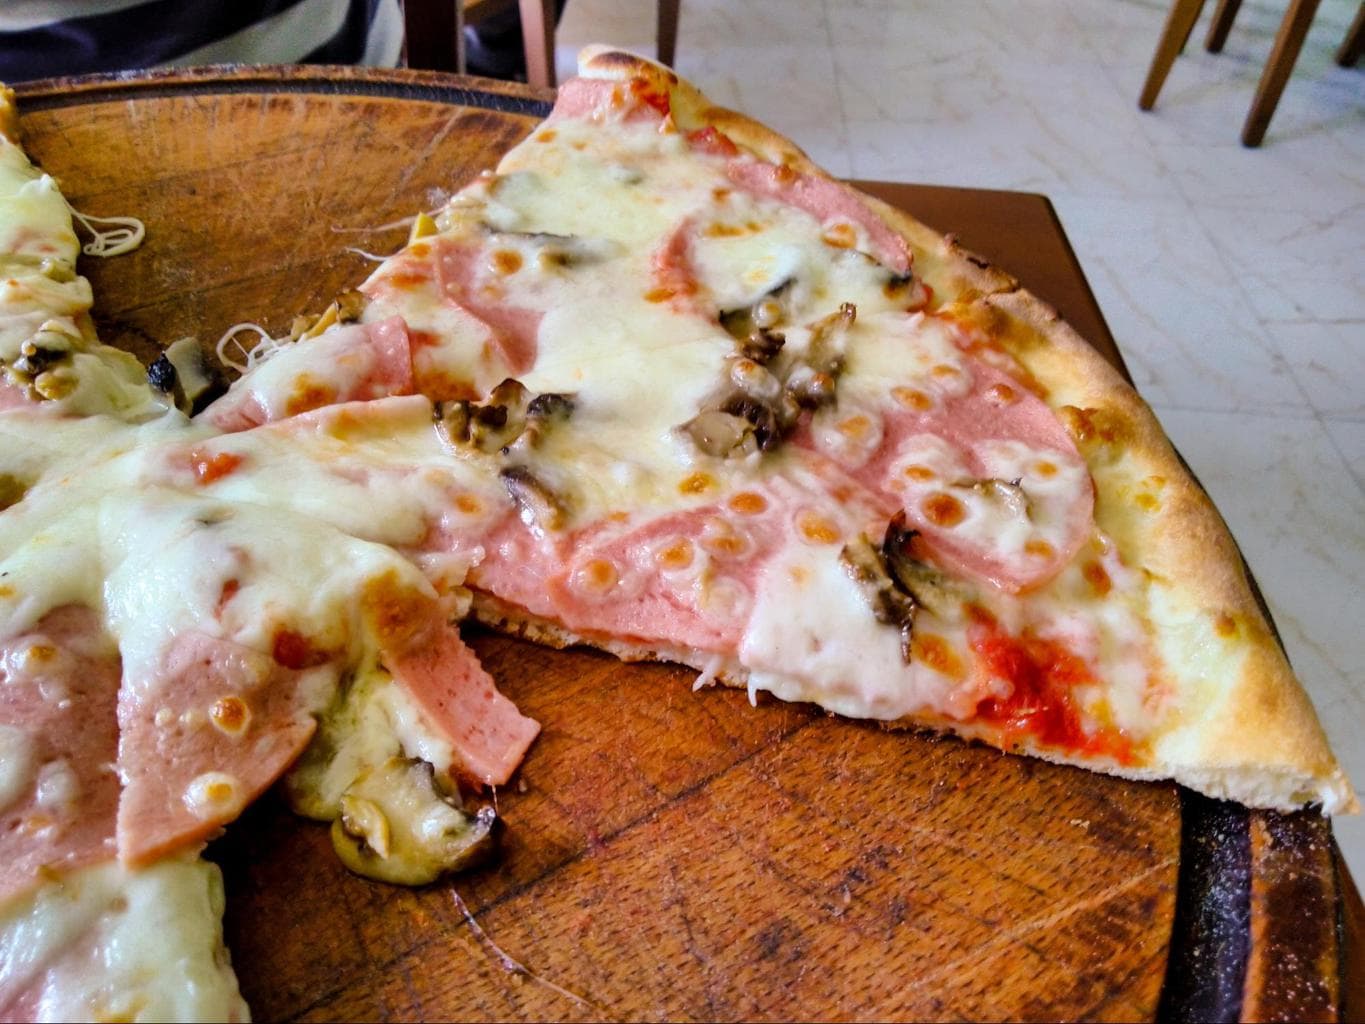 Albanian pizza, pretty much like Italian pizza